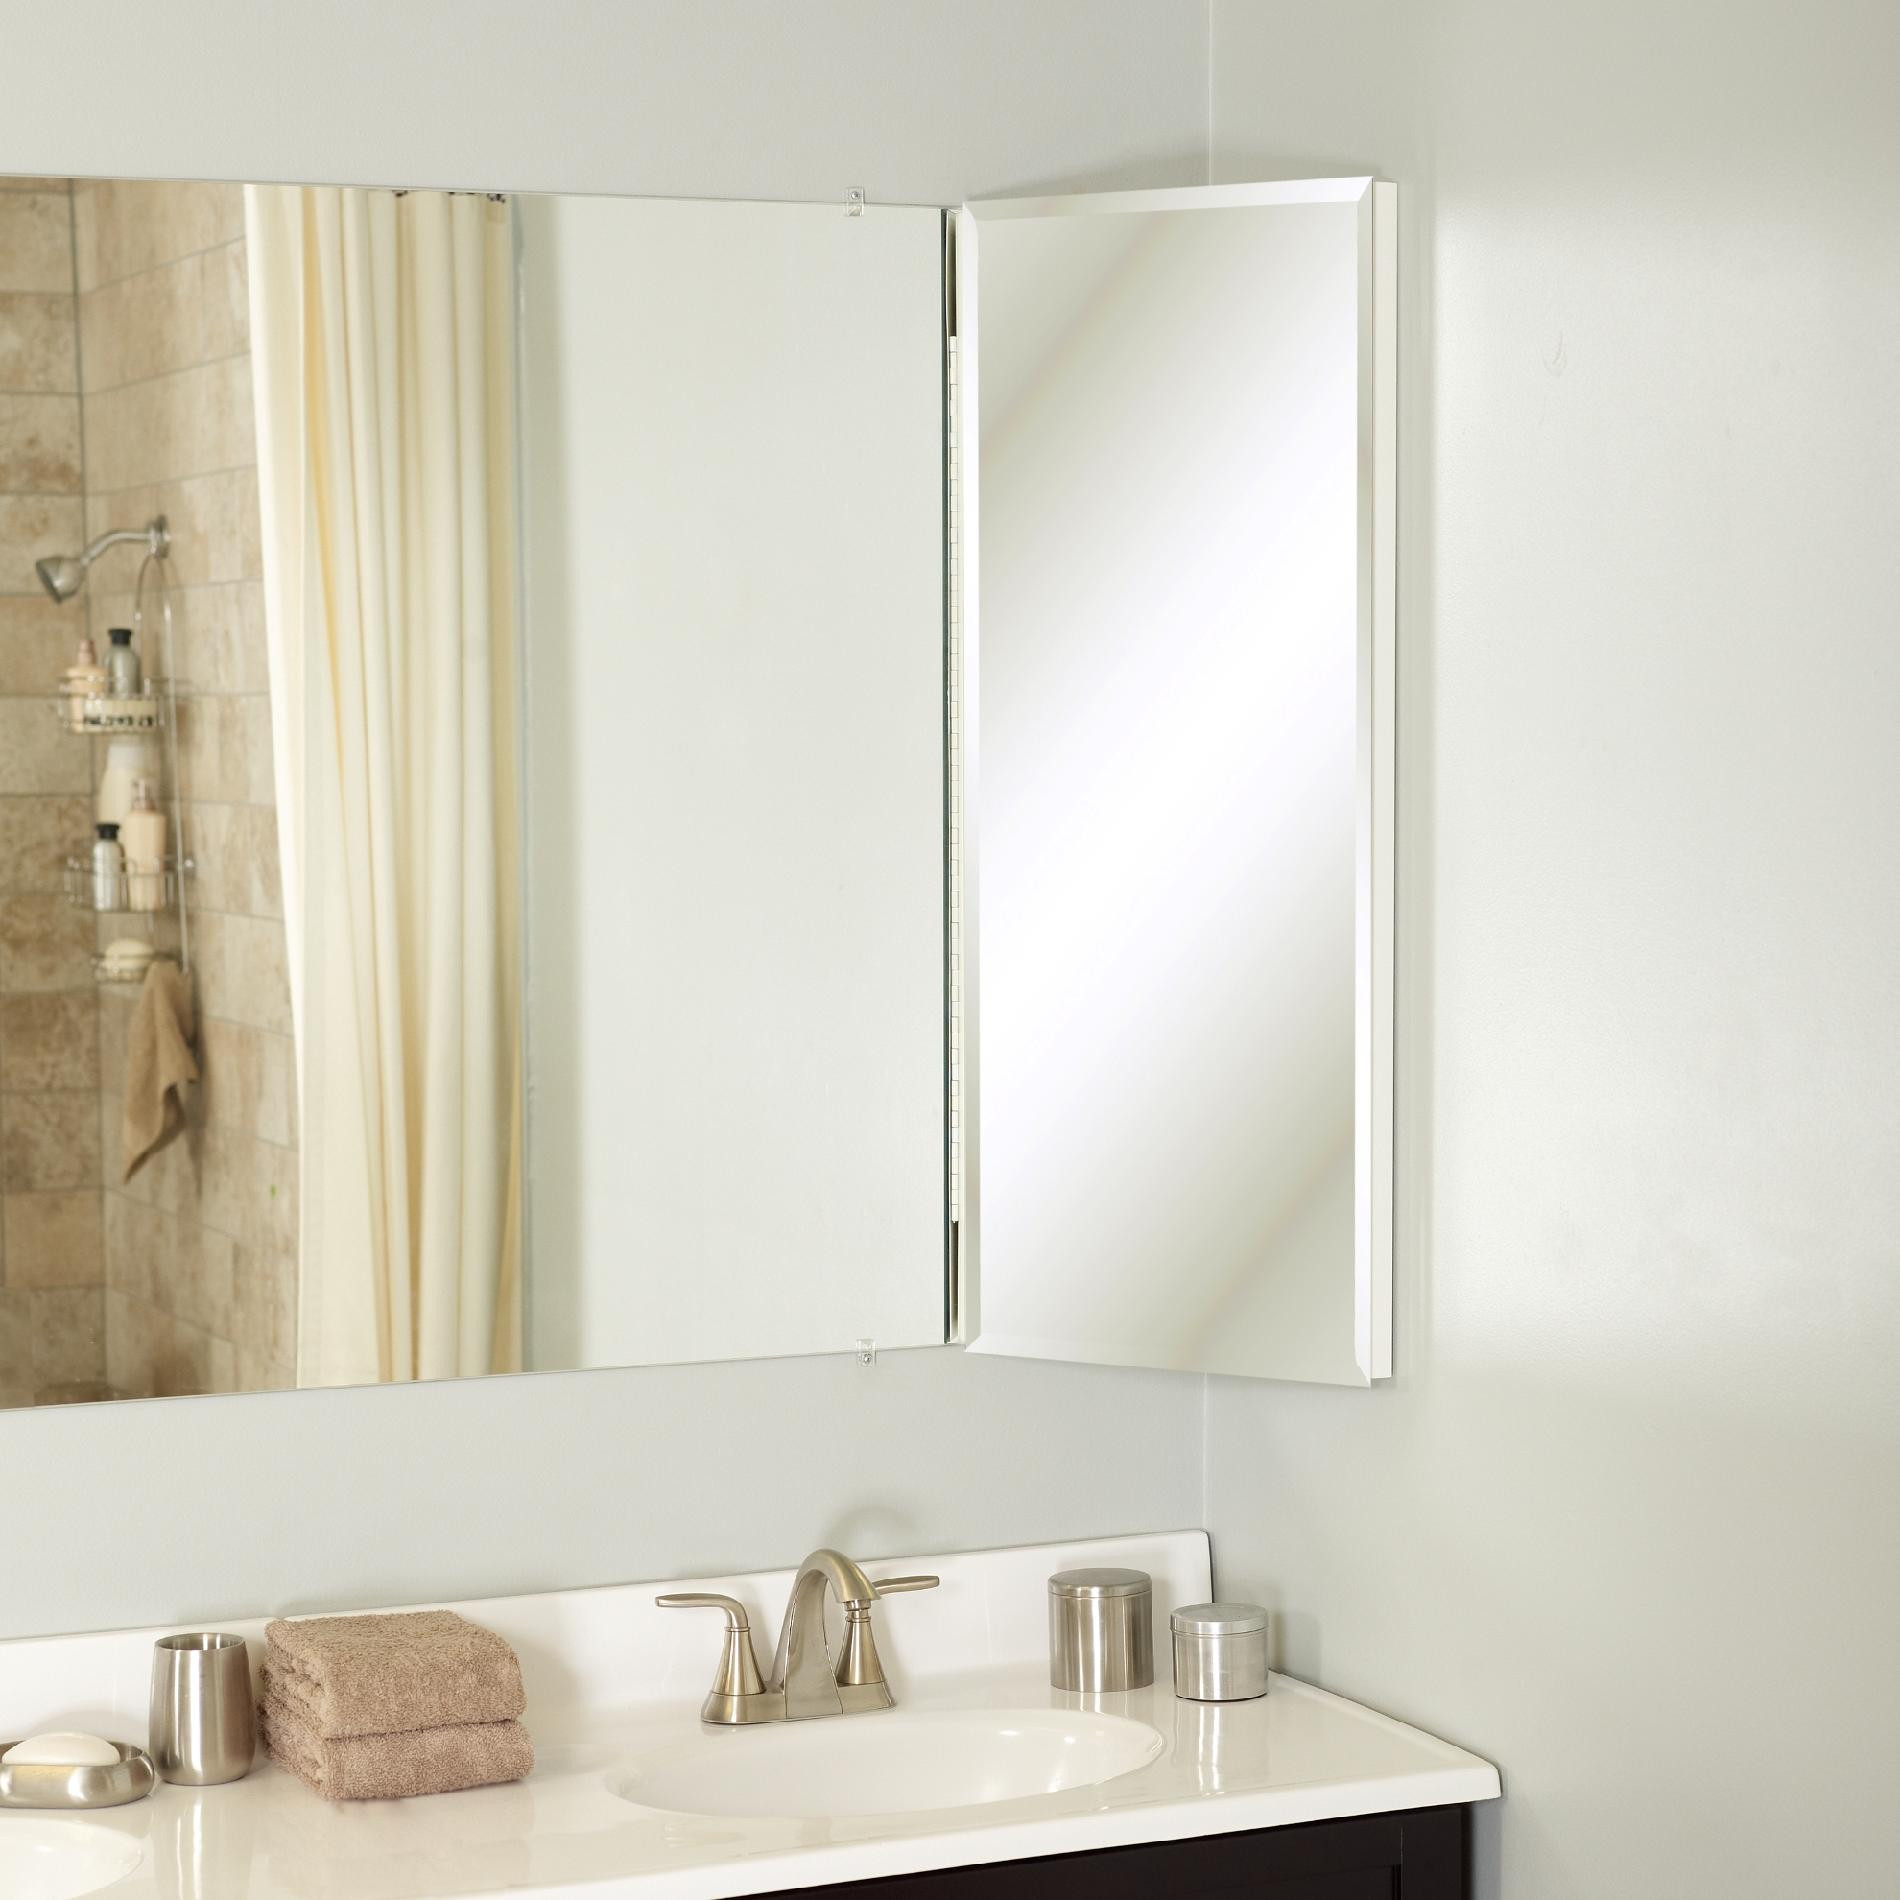 Mirror Bathroom Cabinet
 Zenith Products Over the Mirror Corner Cabinet 14" x 36